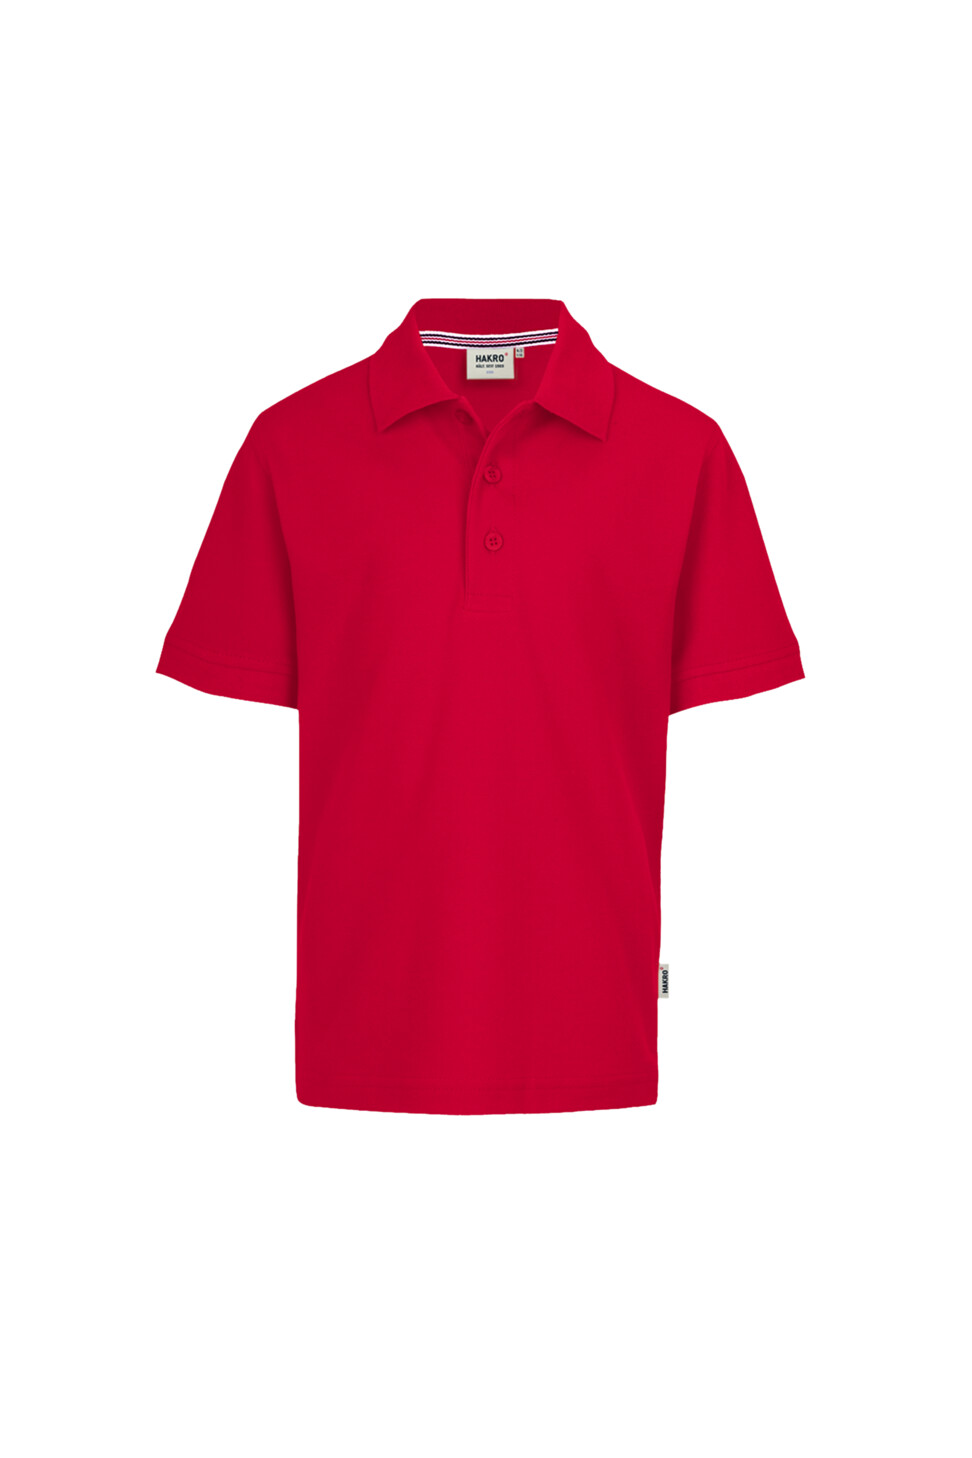 HAKRO Kinder Poloshirt Classic, rot, 140, 400